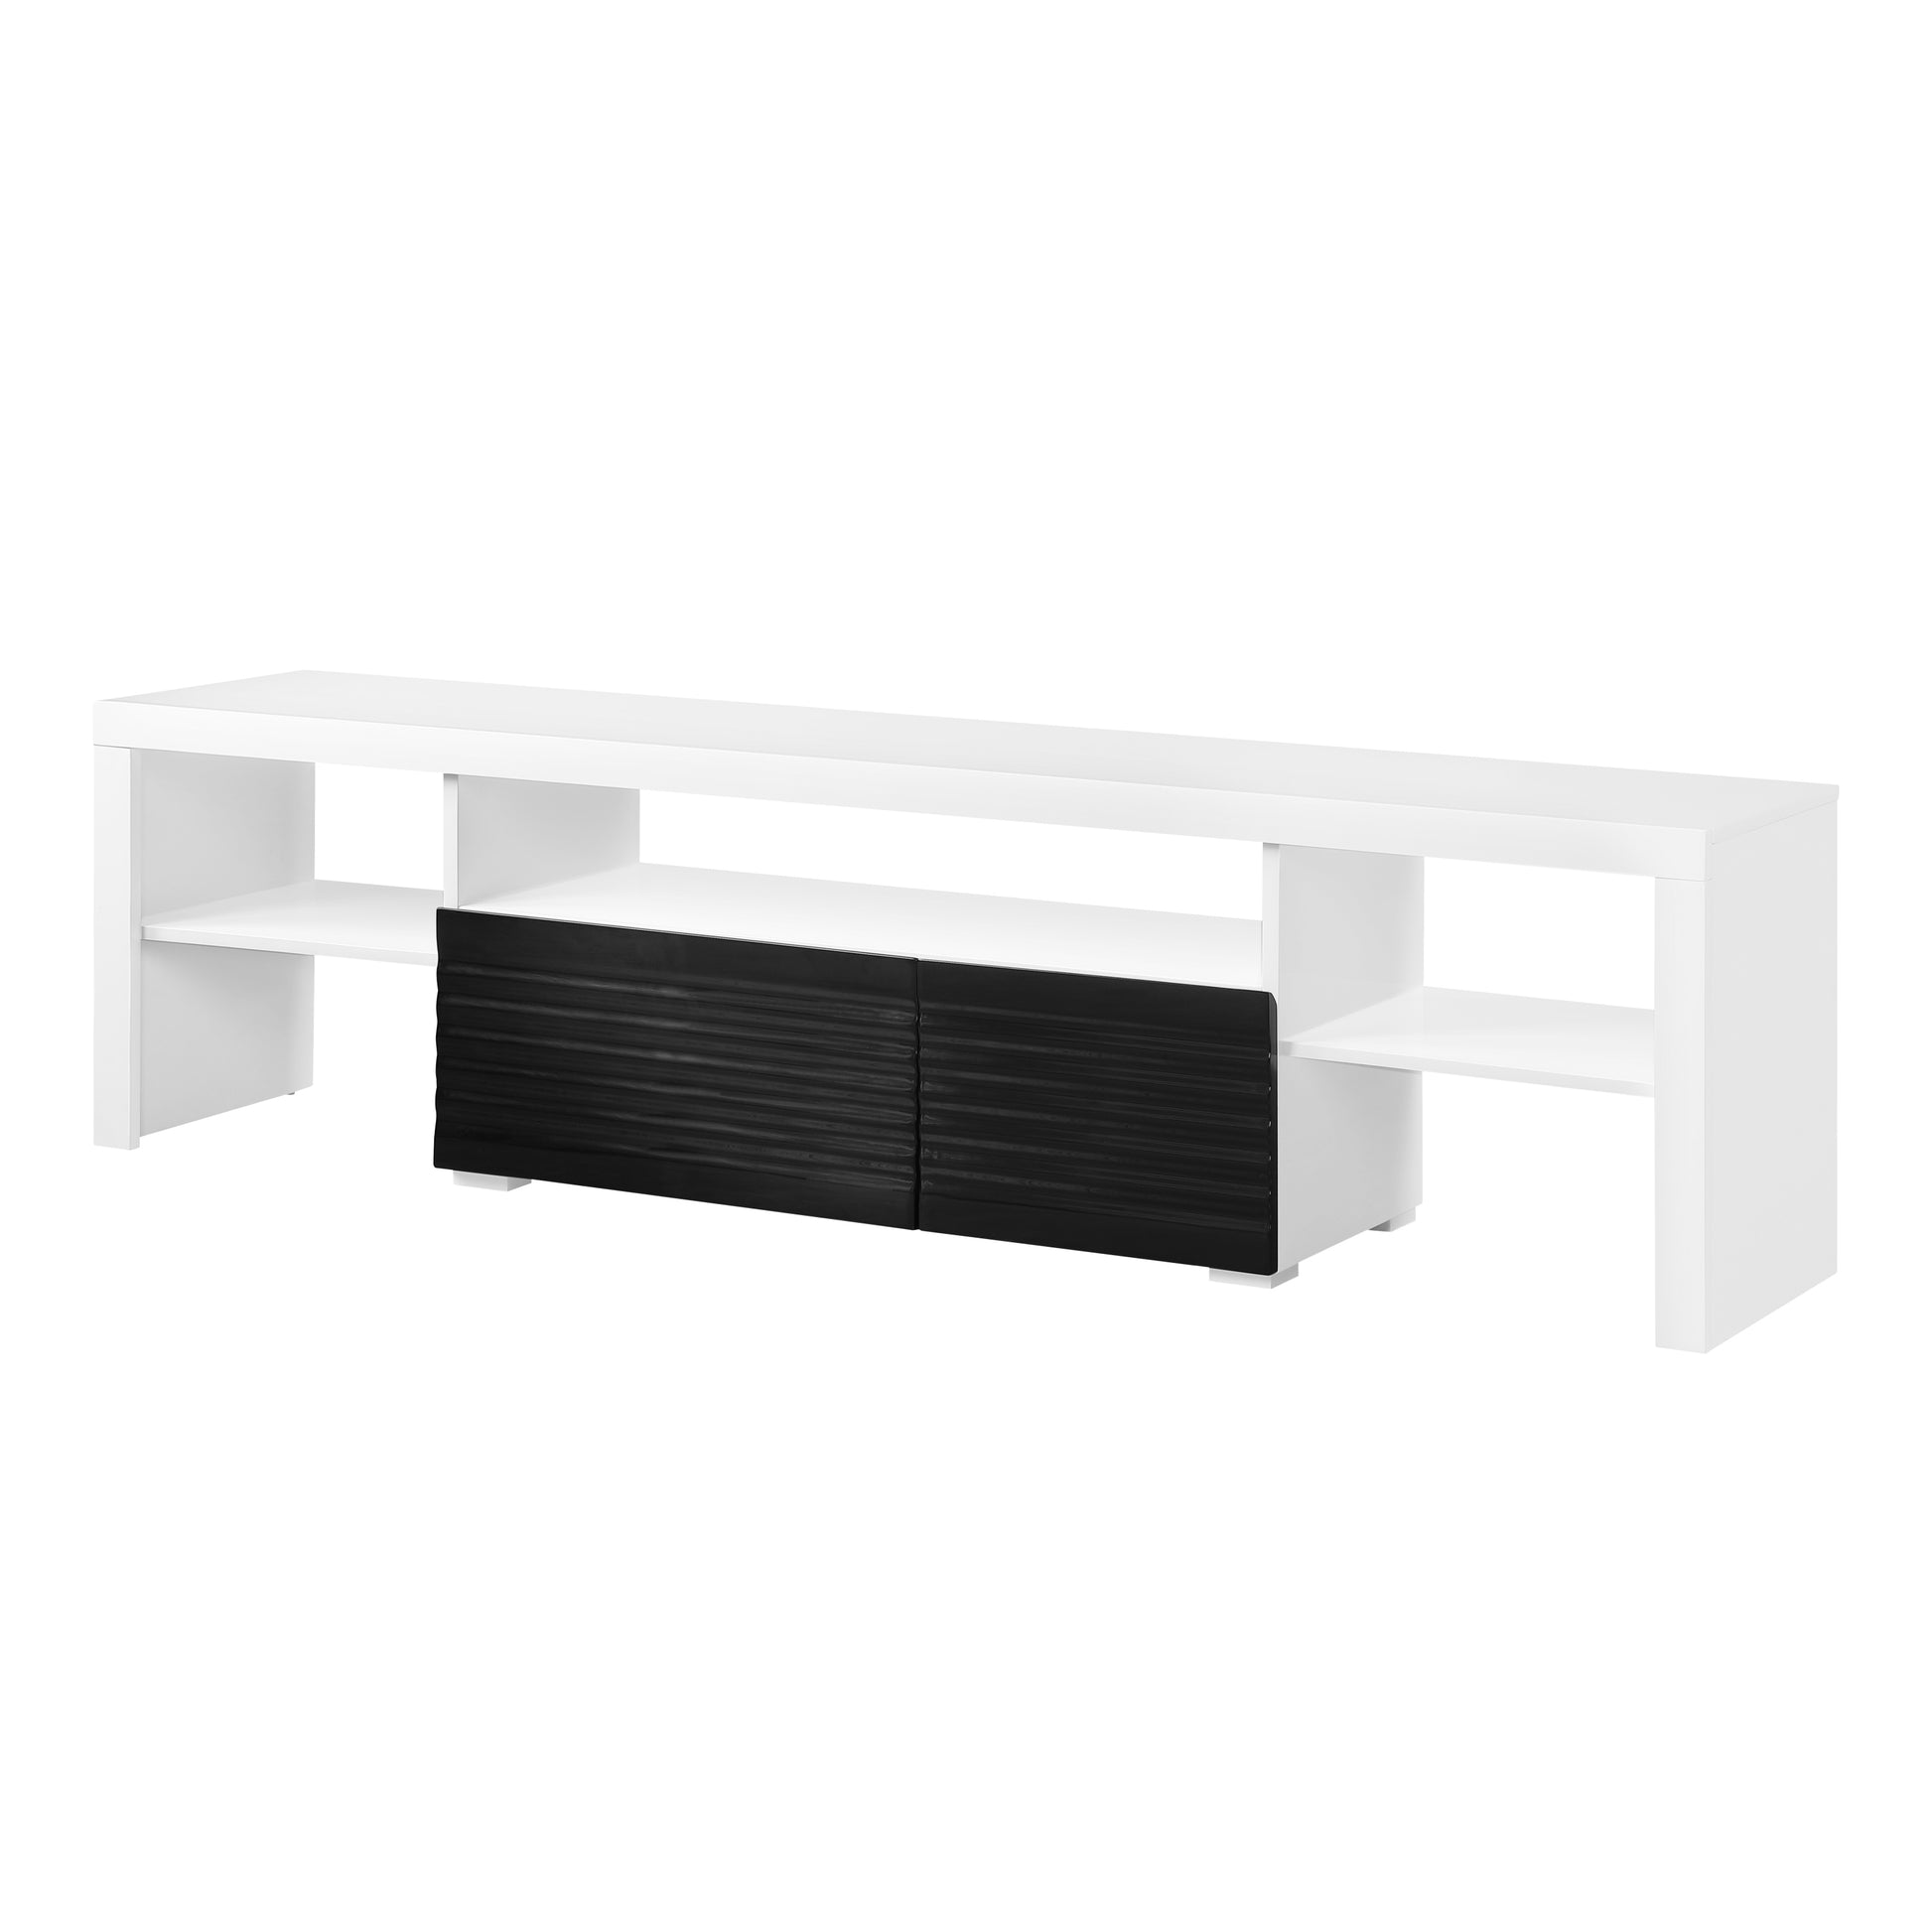 ACME Buck II TV Stand in White & Black High Gloss Finish LV00998 - Enova Luxe Home Store